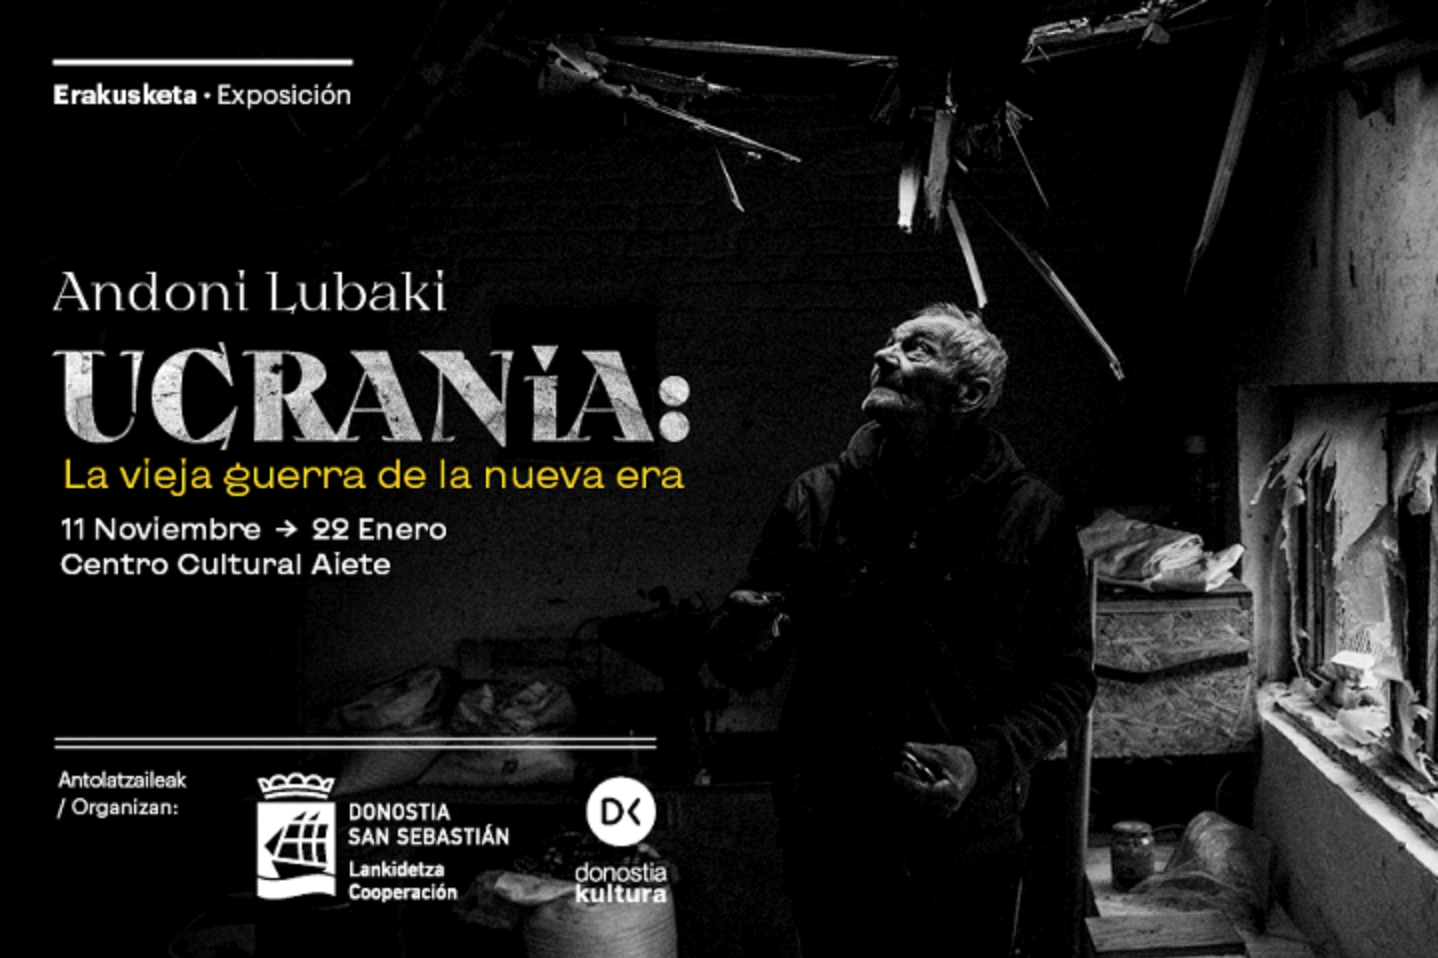 Ukraines War exhibition in San Sebastian - Basque Country